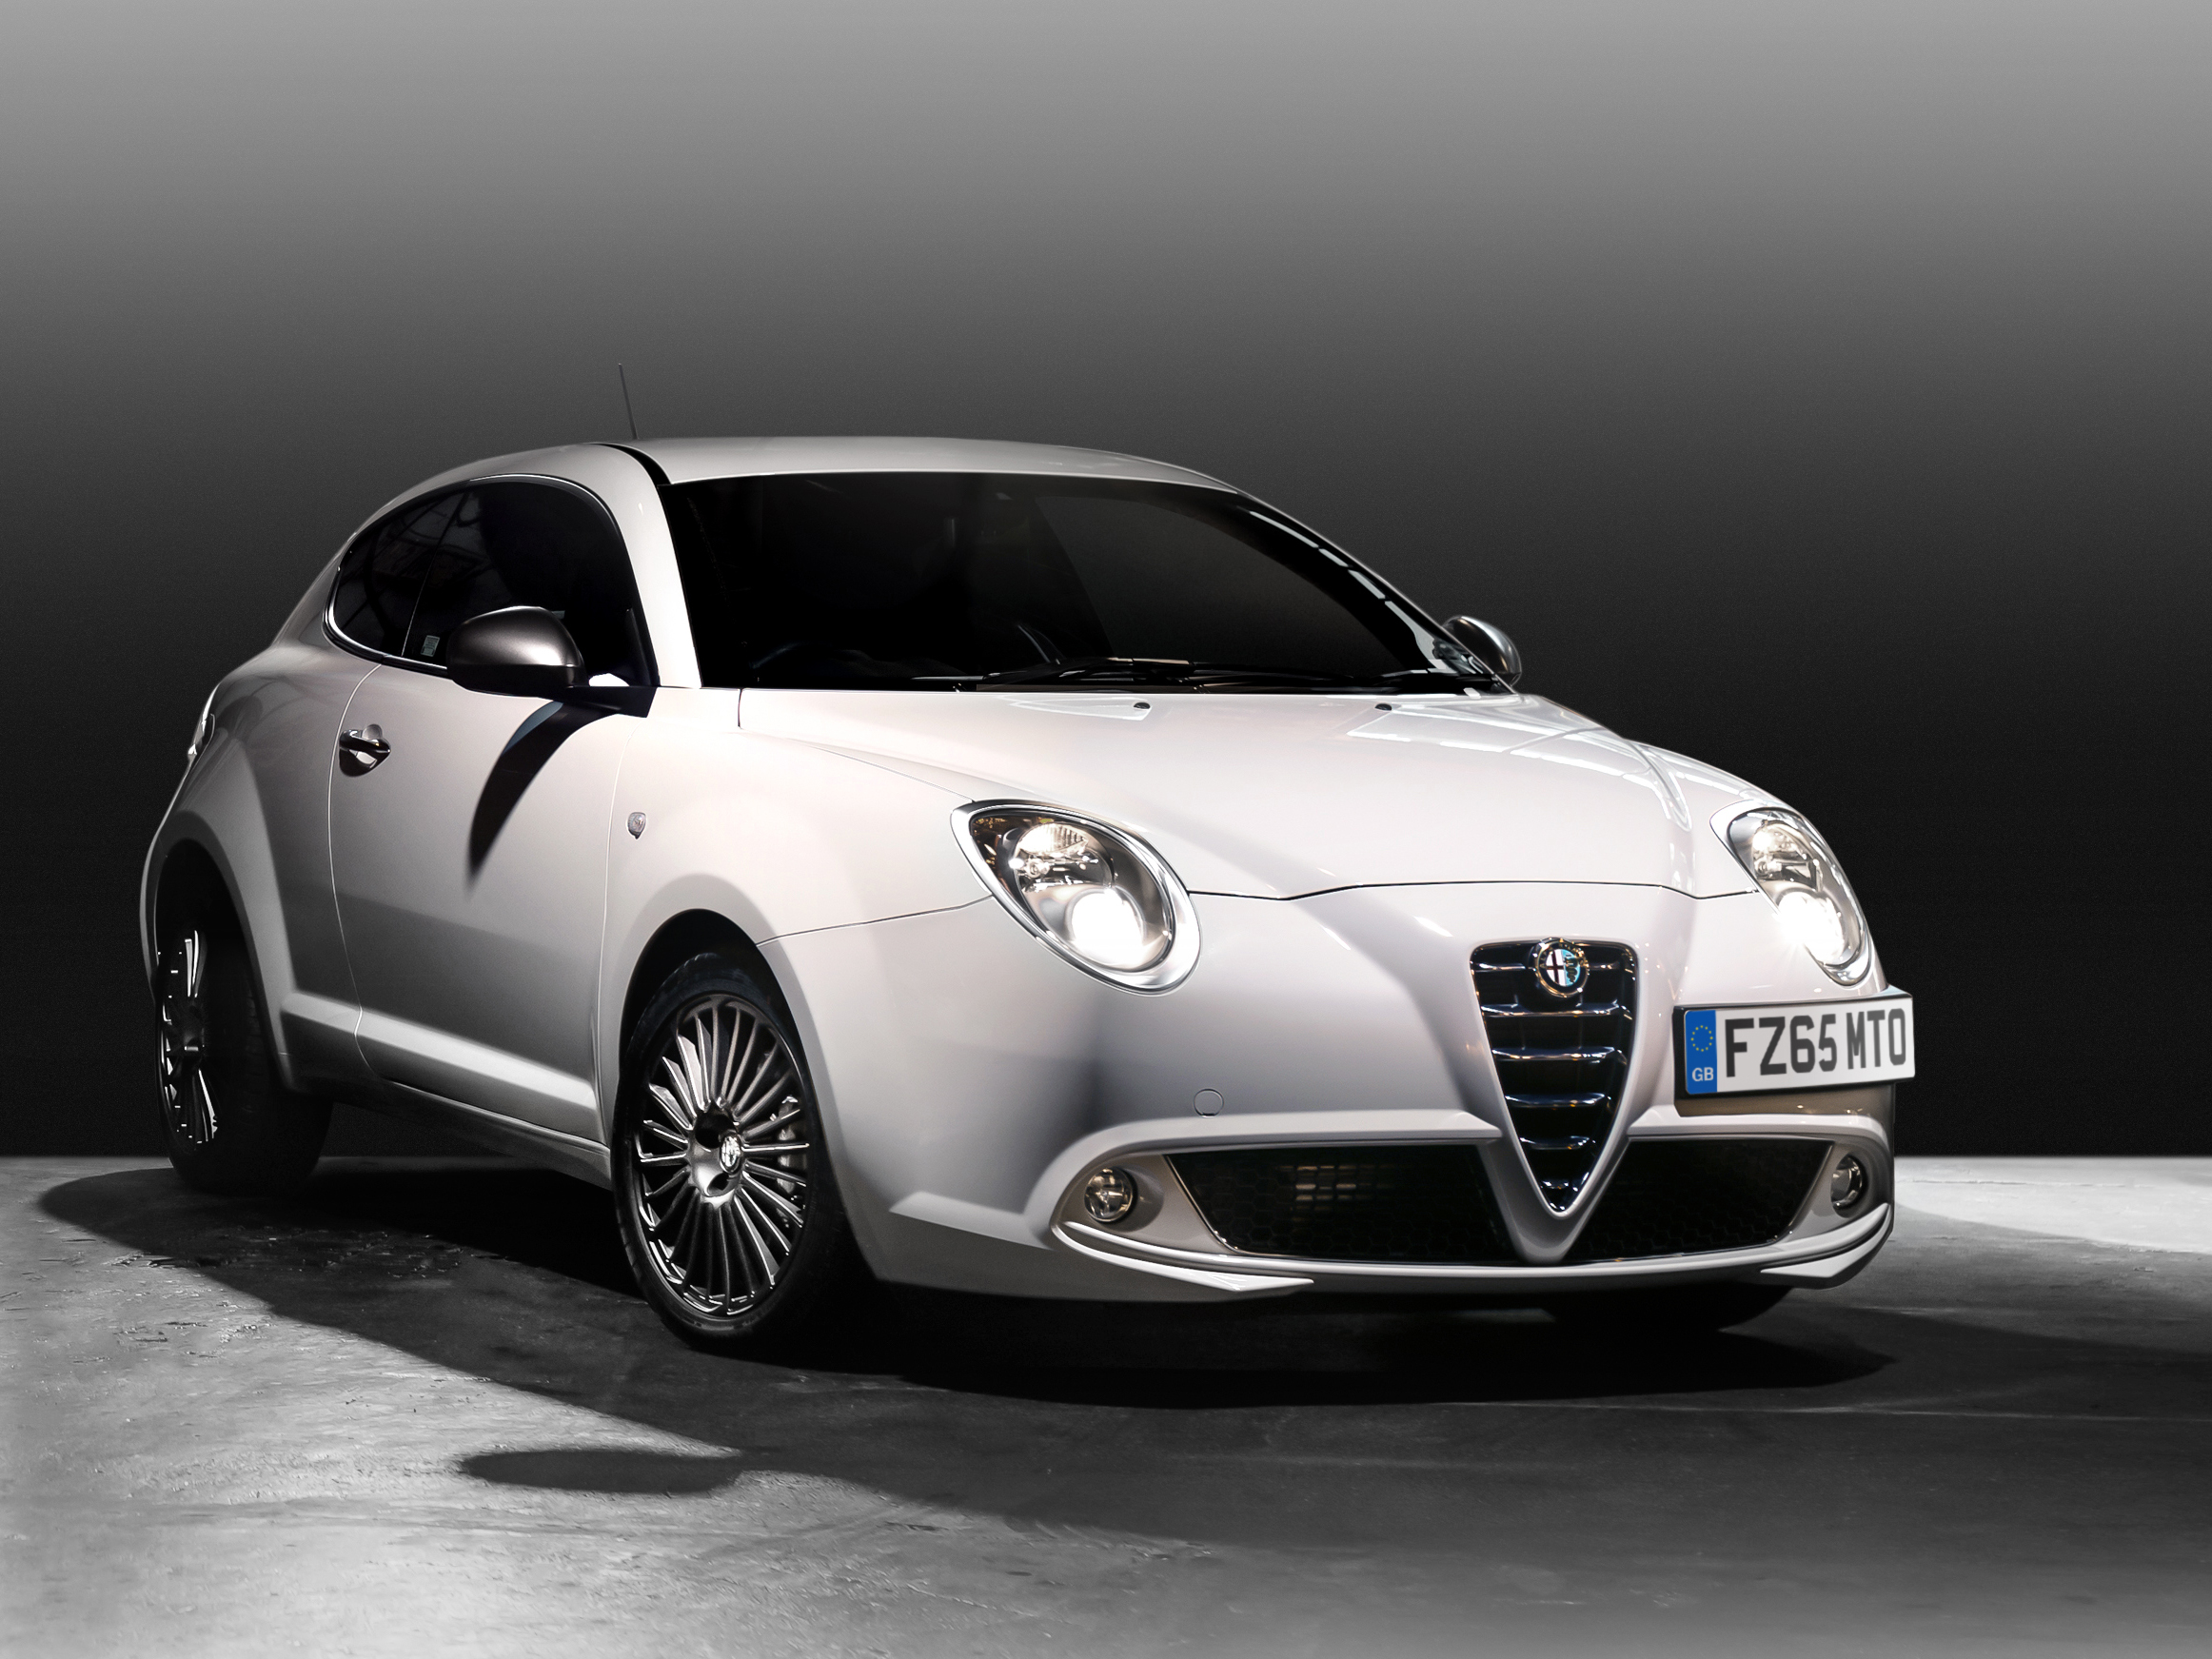 New flagship trim levels for Alfa Romeo MiTo and Giulietta